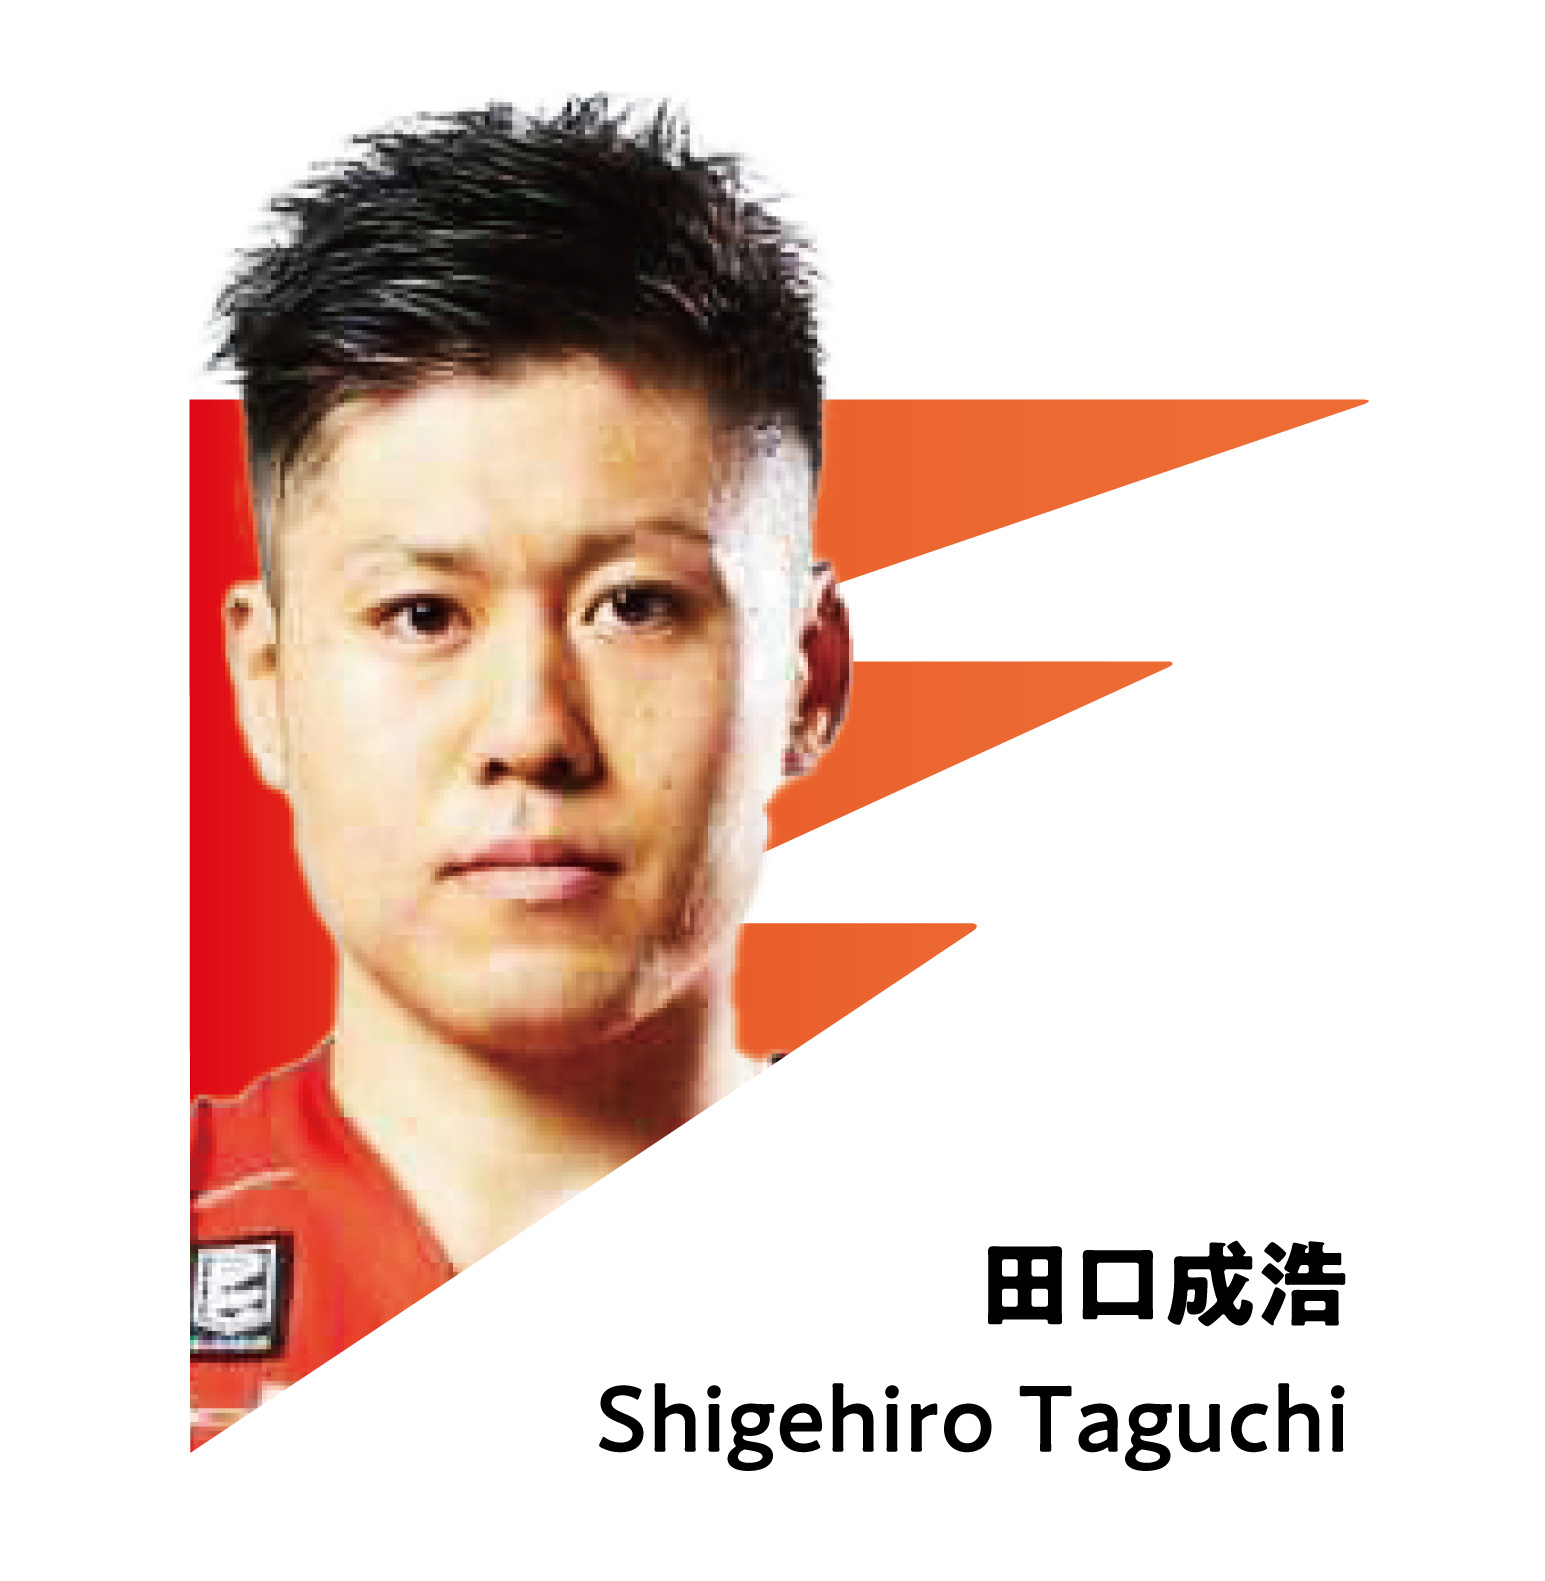 SHIGEHIRO TAGUCHI